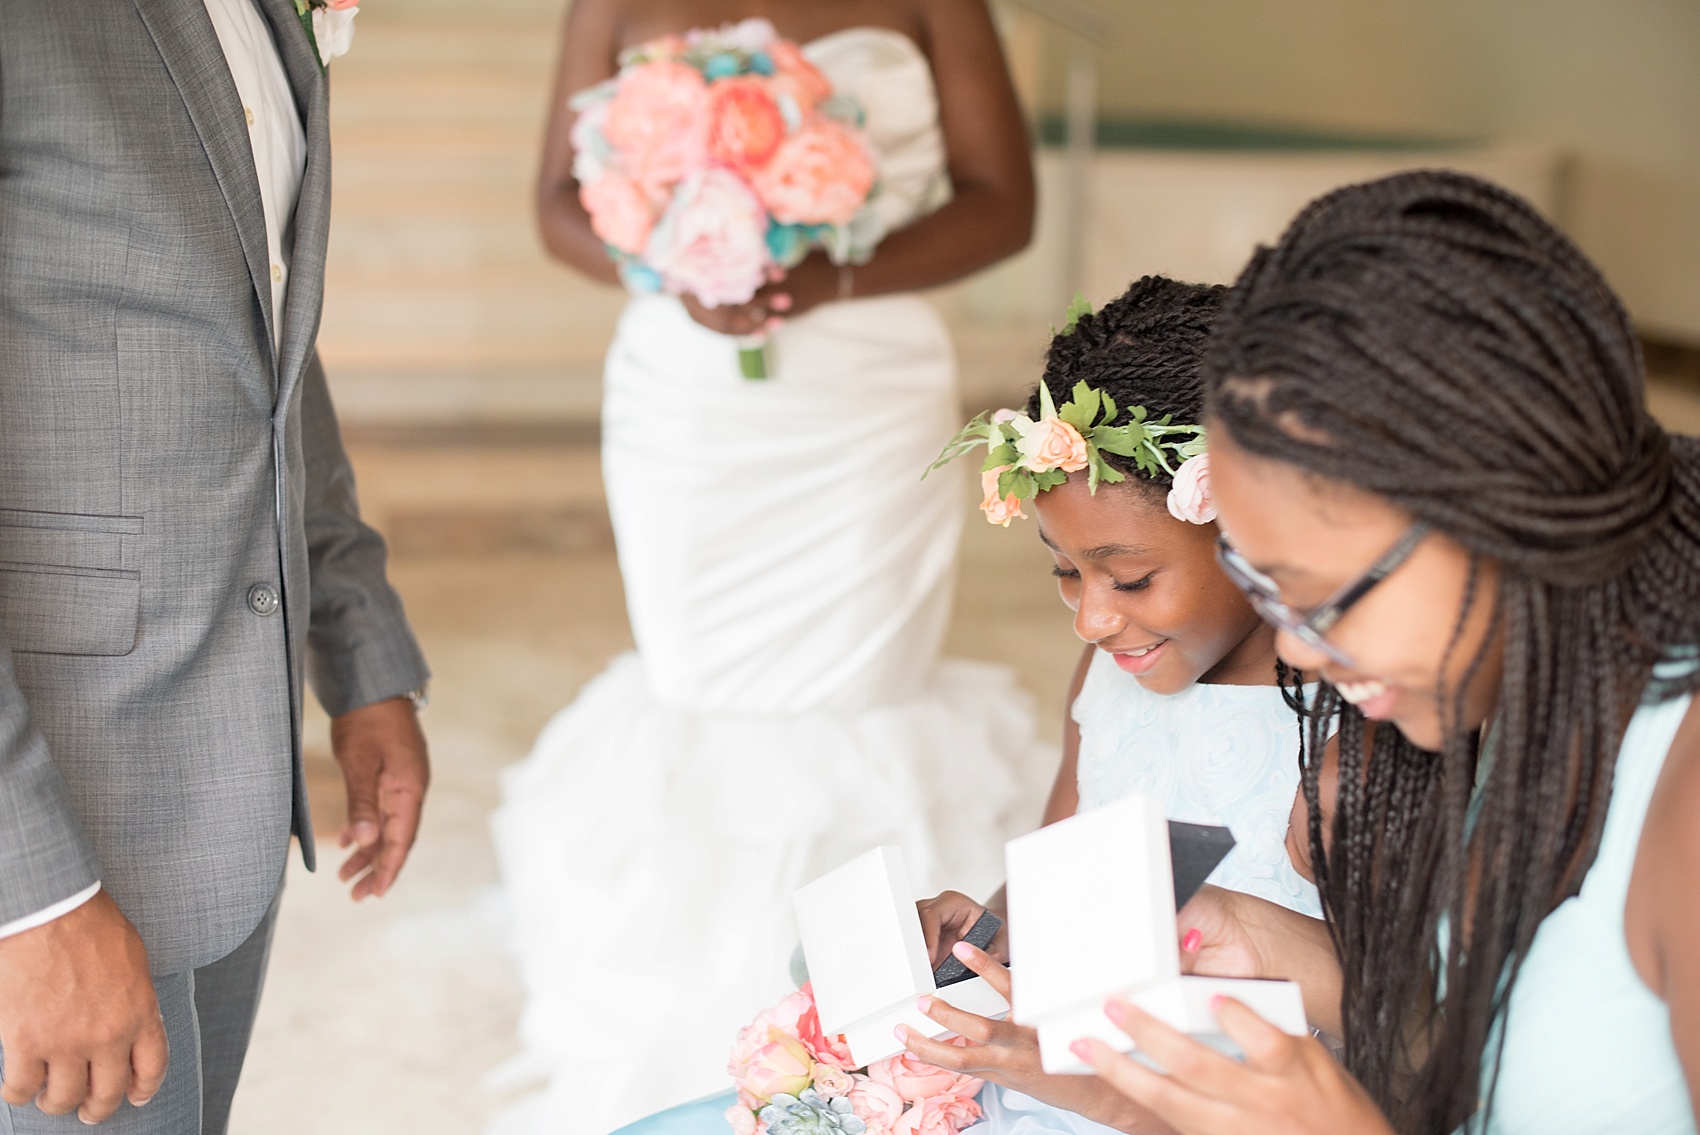 Iberostar Jamaica wedding photos, bridesmaids. Images by Mikkel Paige Photography.